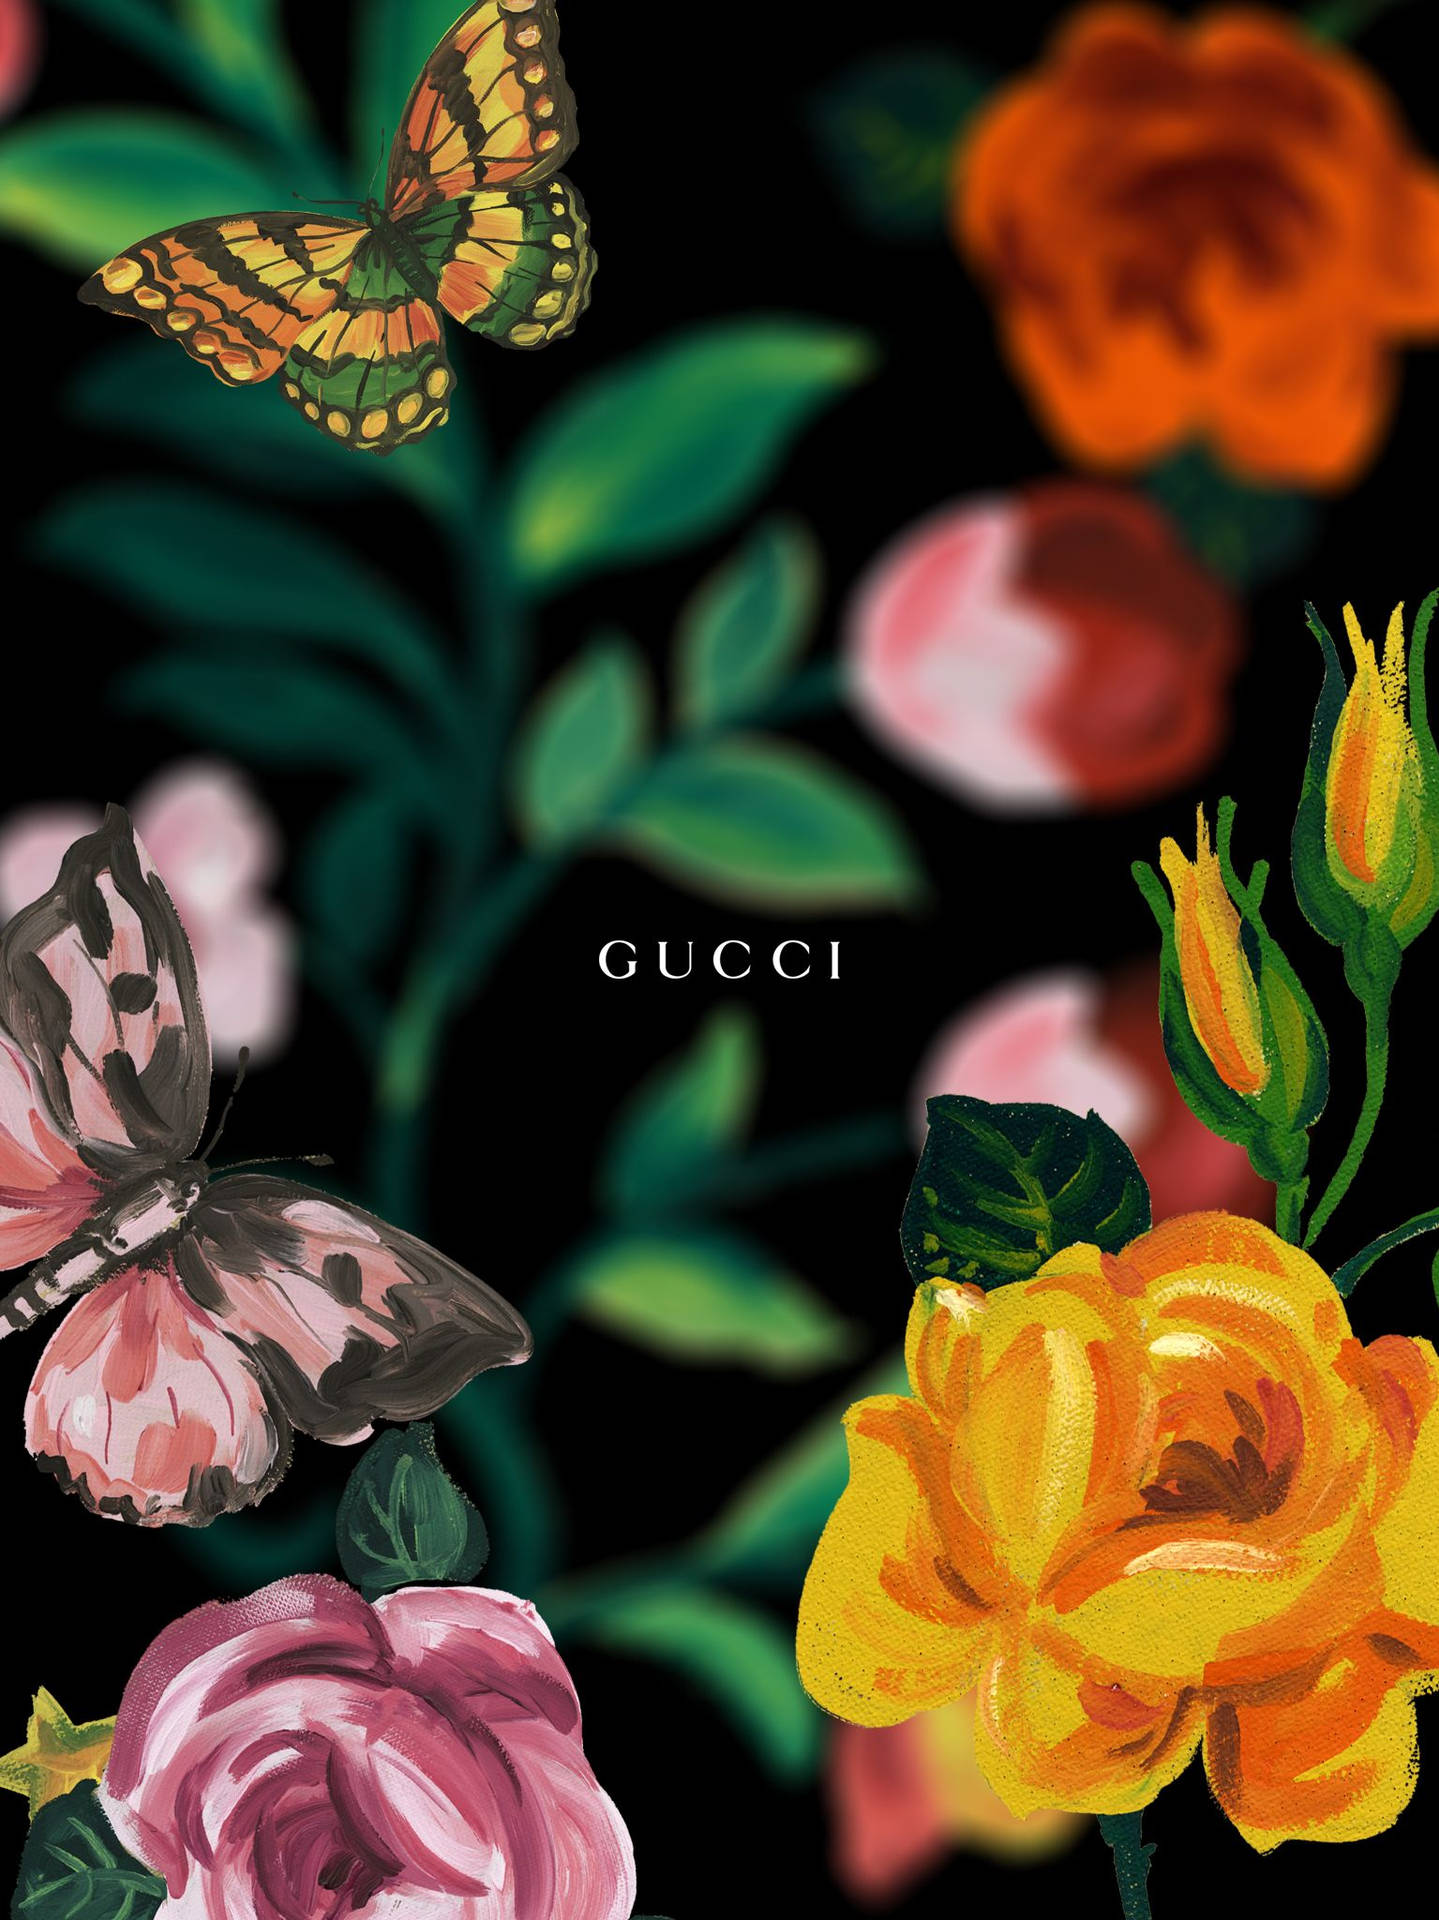 Gucci 1535X2048 wallpaper